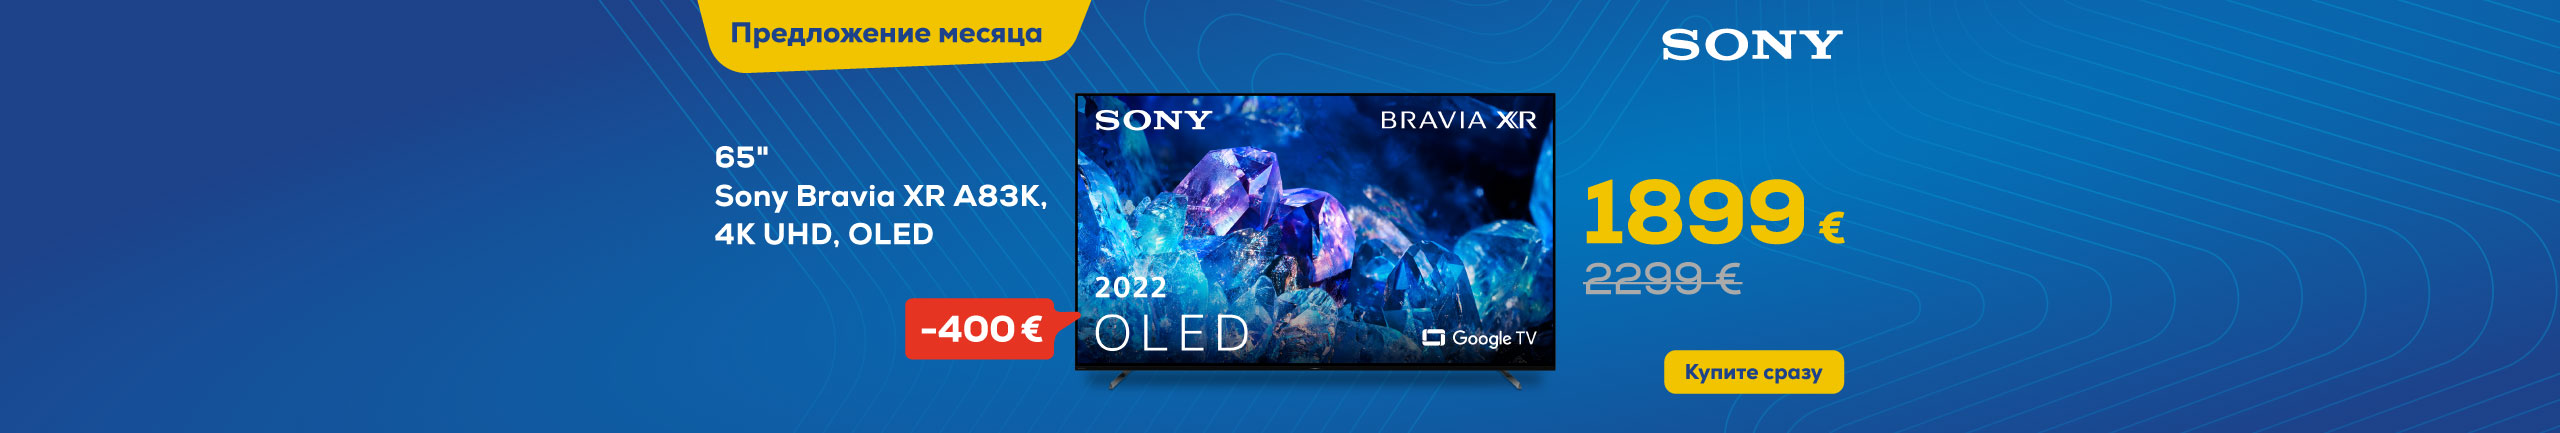 Sony Bravia XR A83K